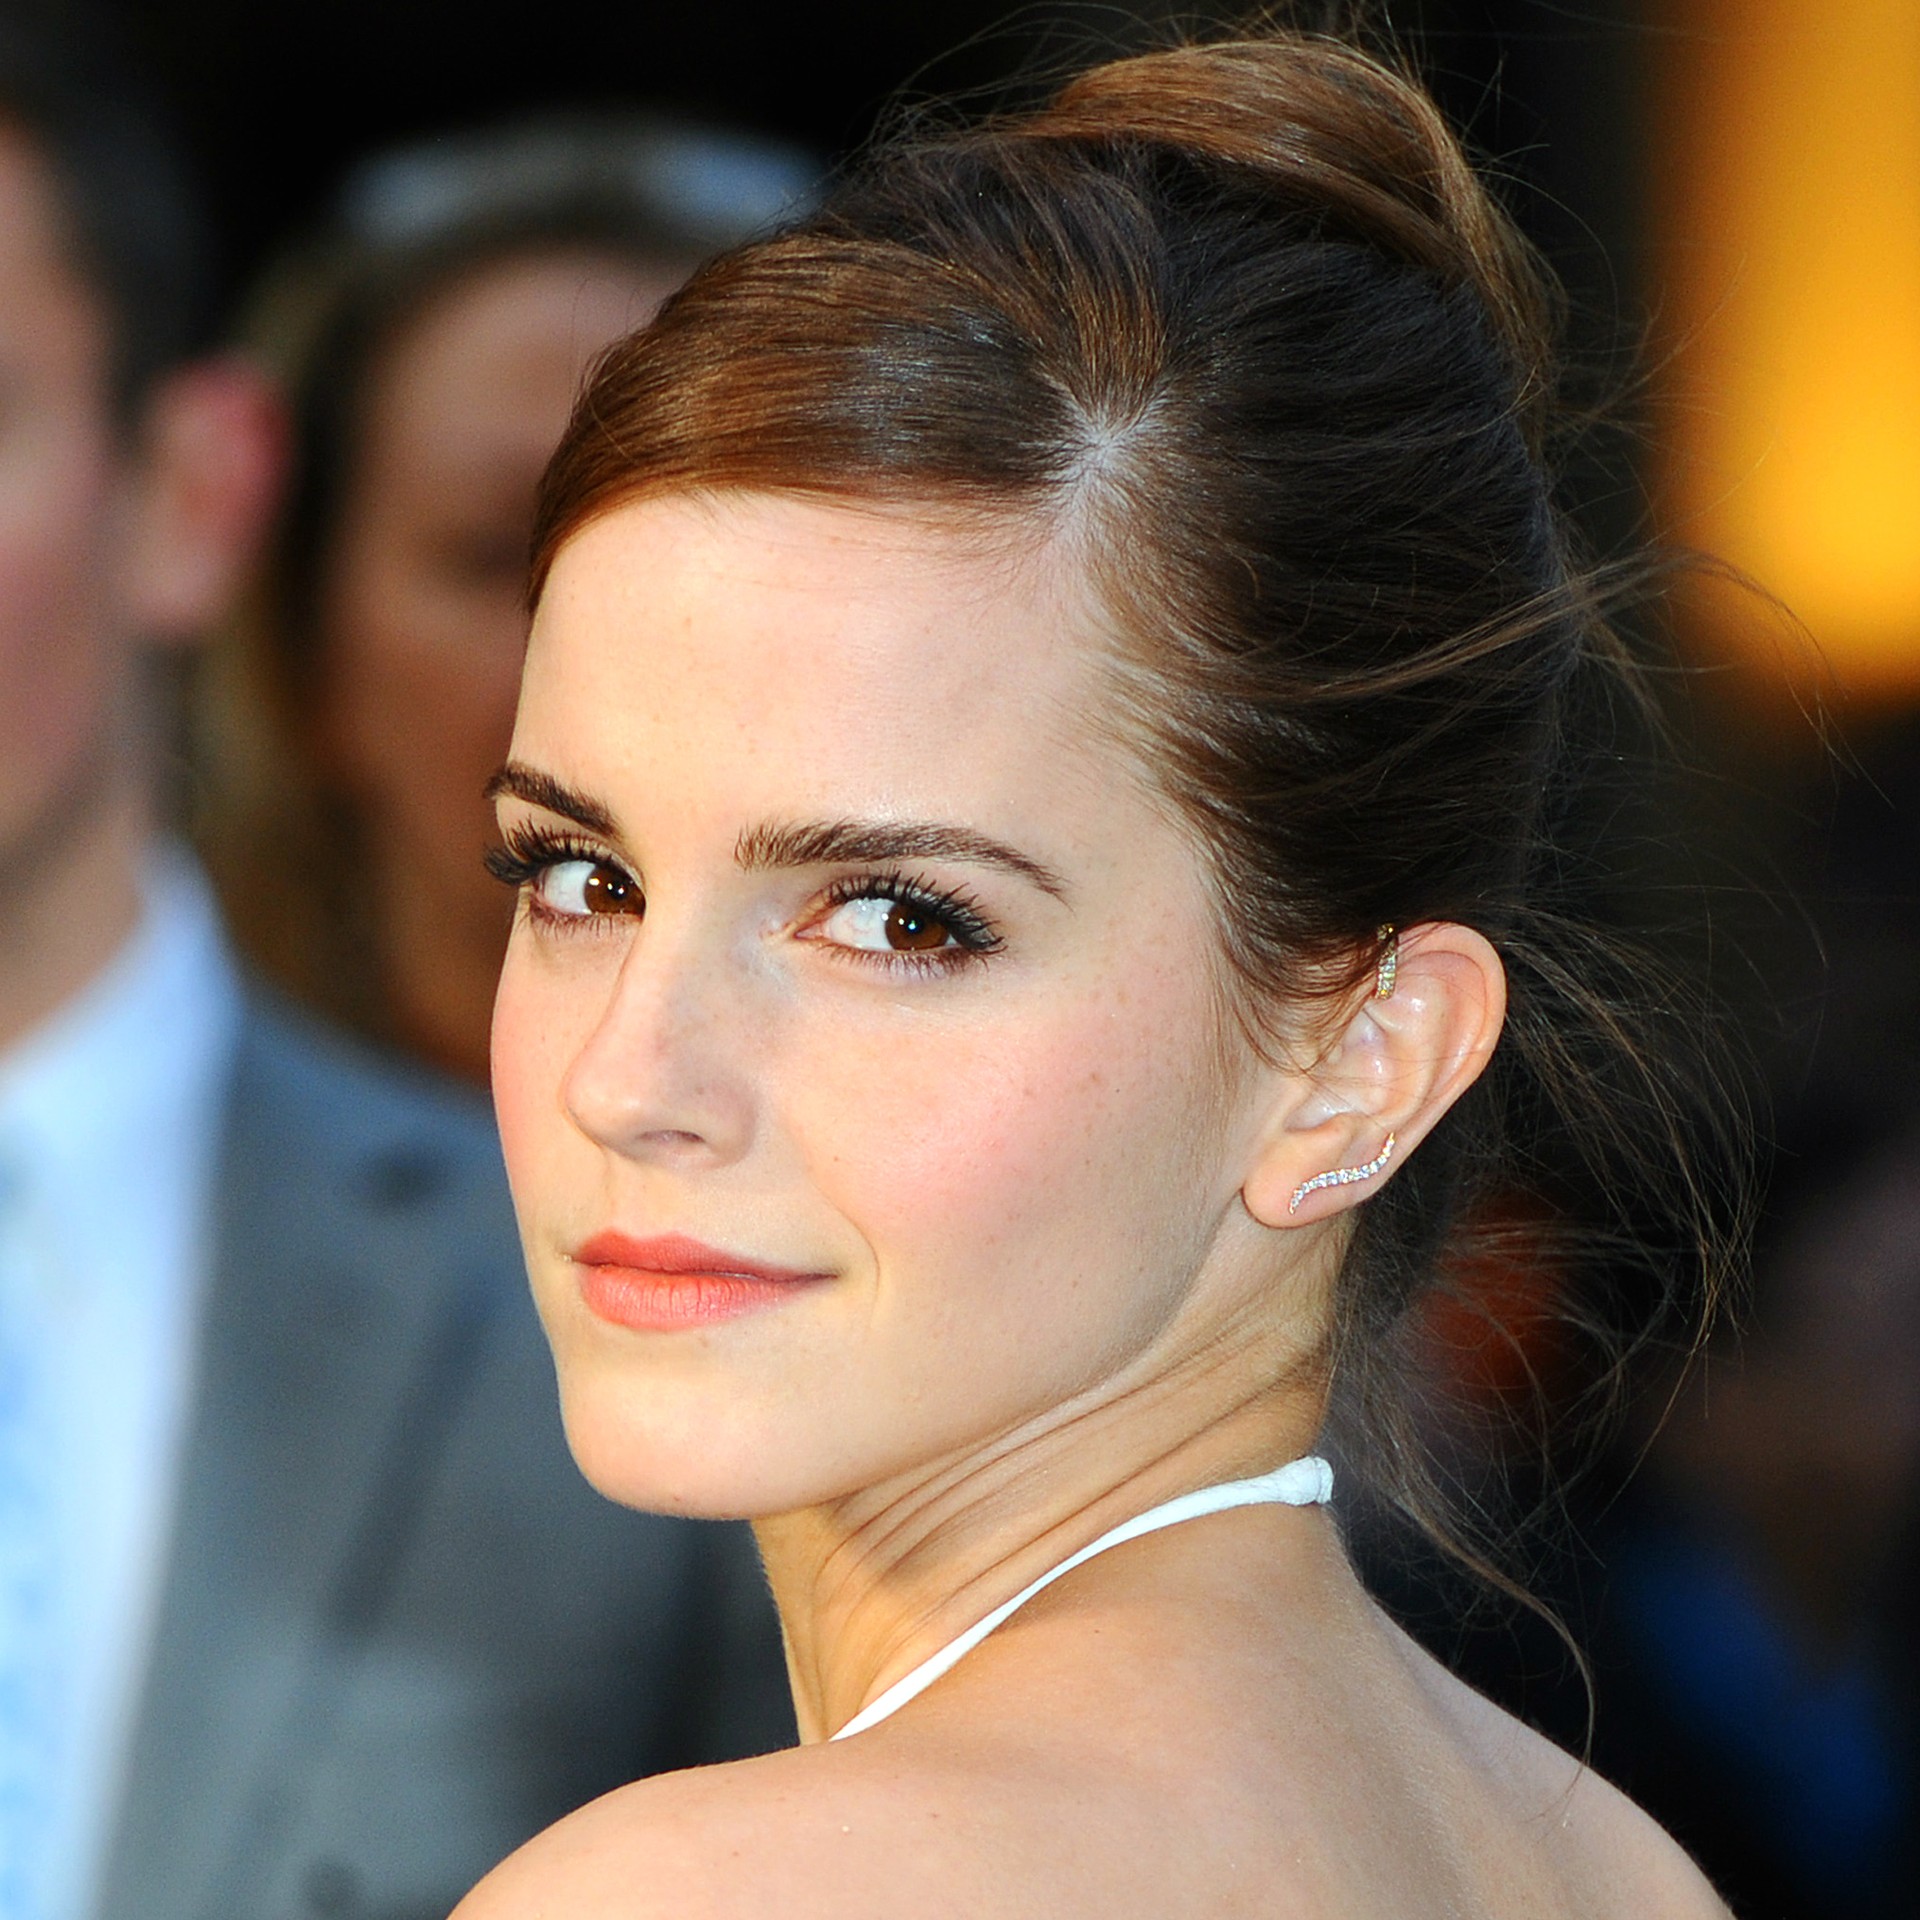 Emma Watson. (Foto: Getty Images)